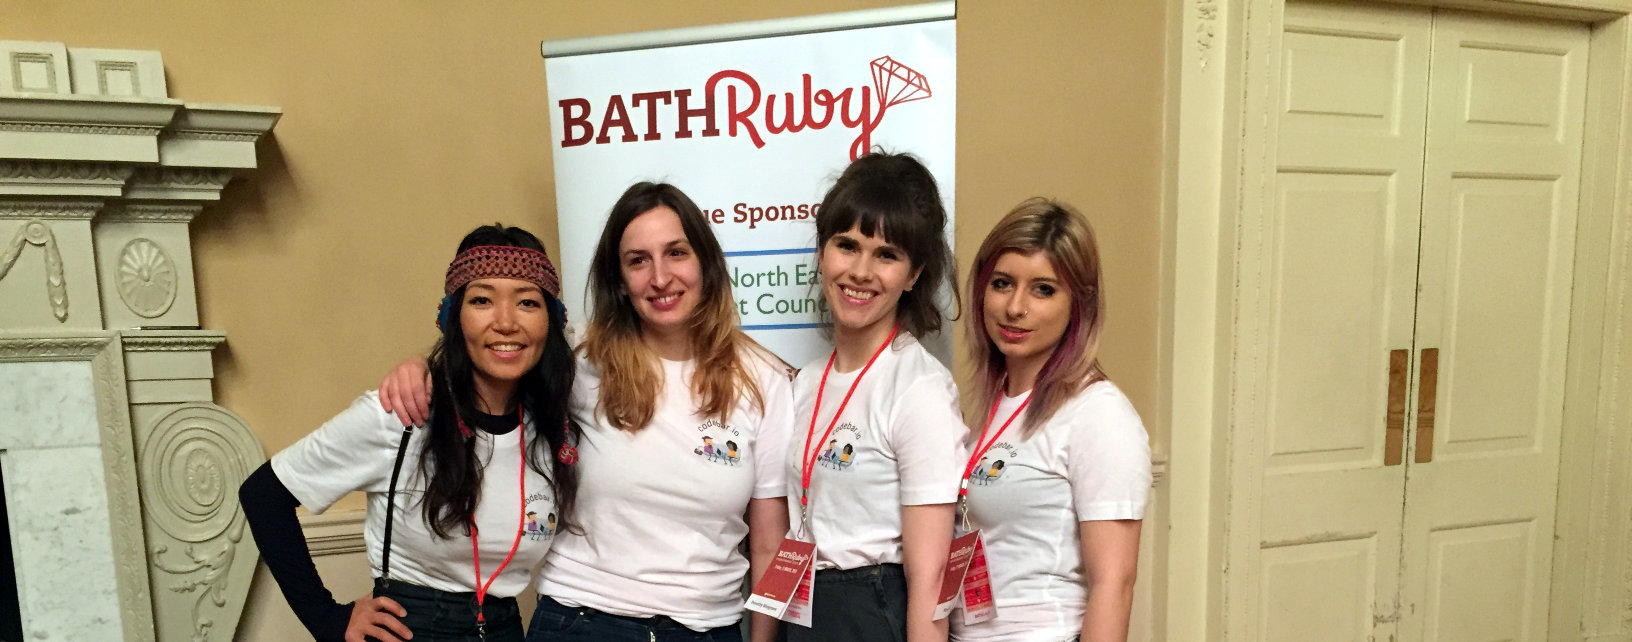 codebar organisers at Bath Ruby